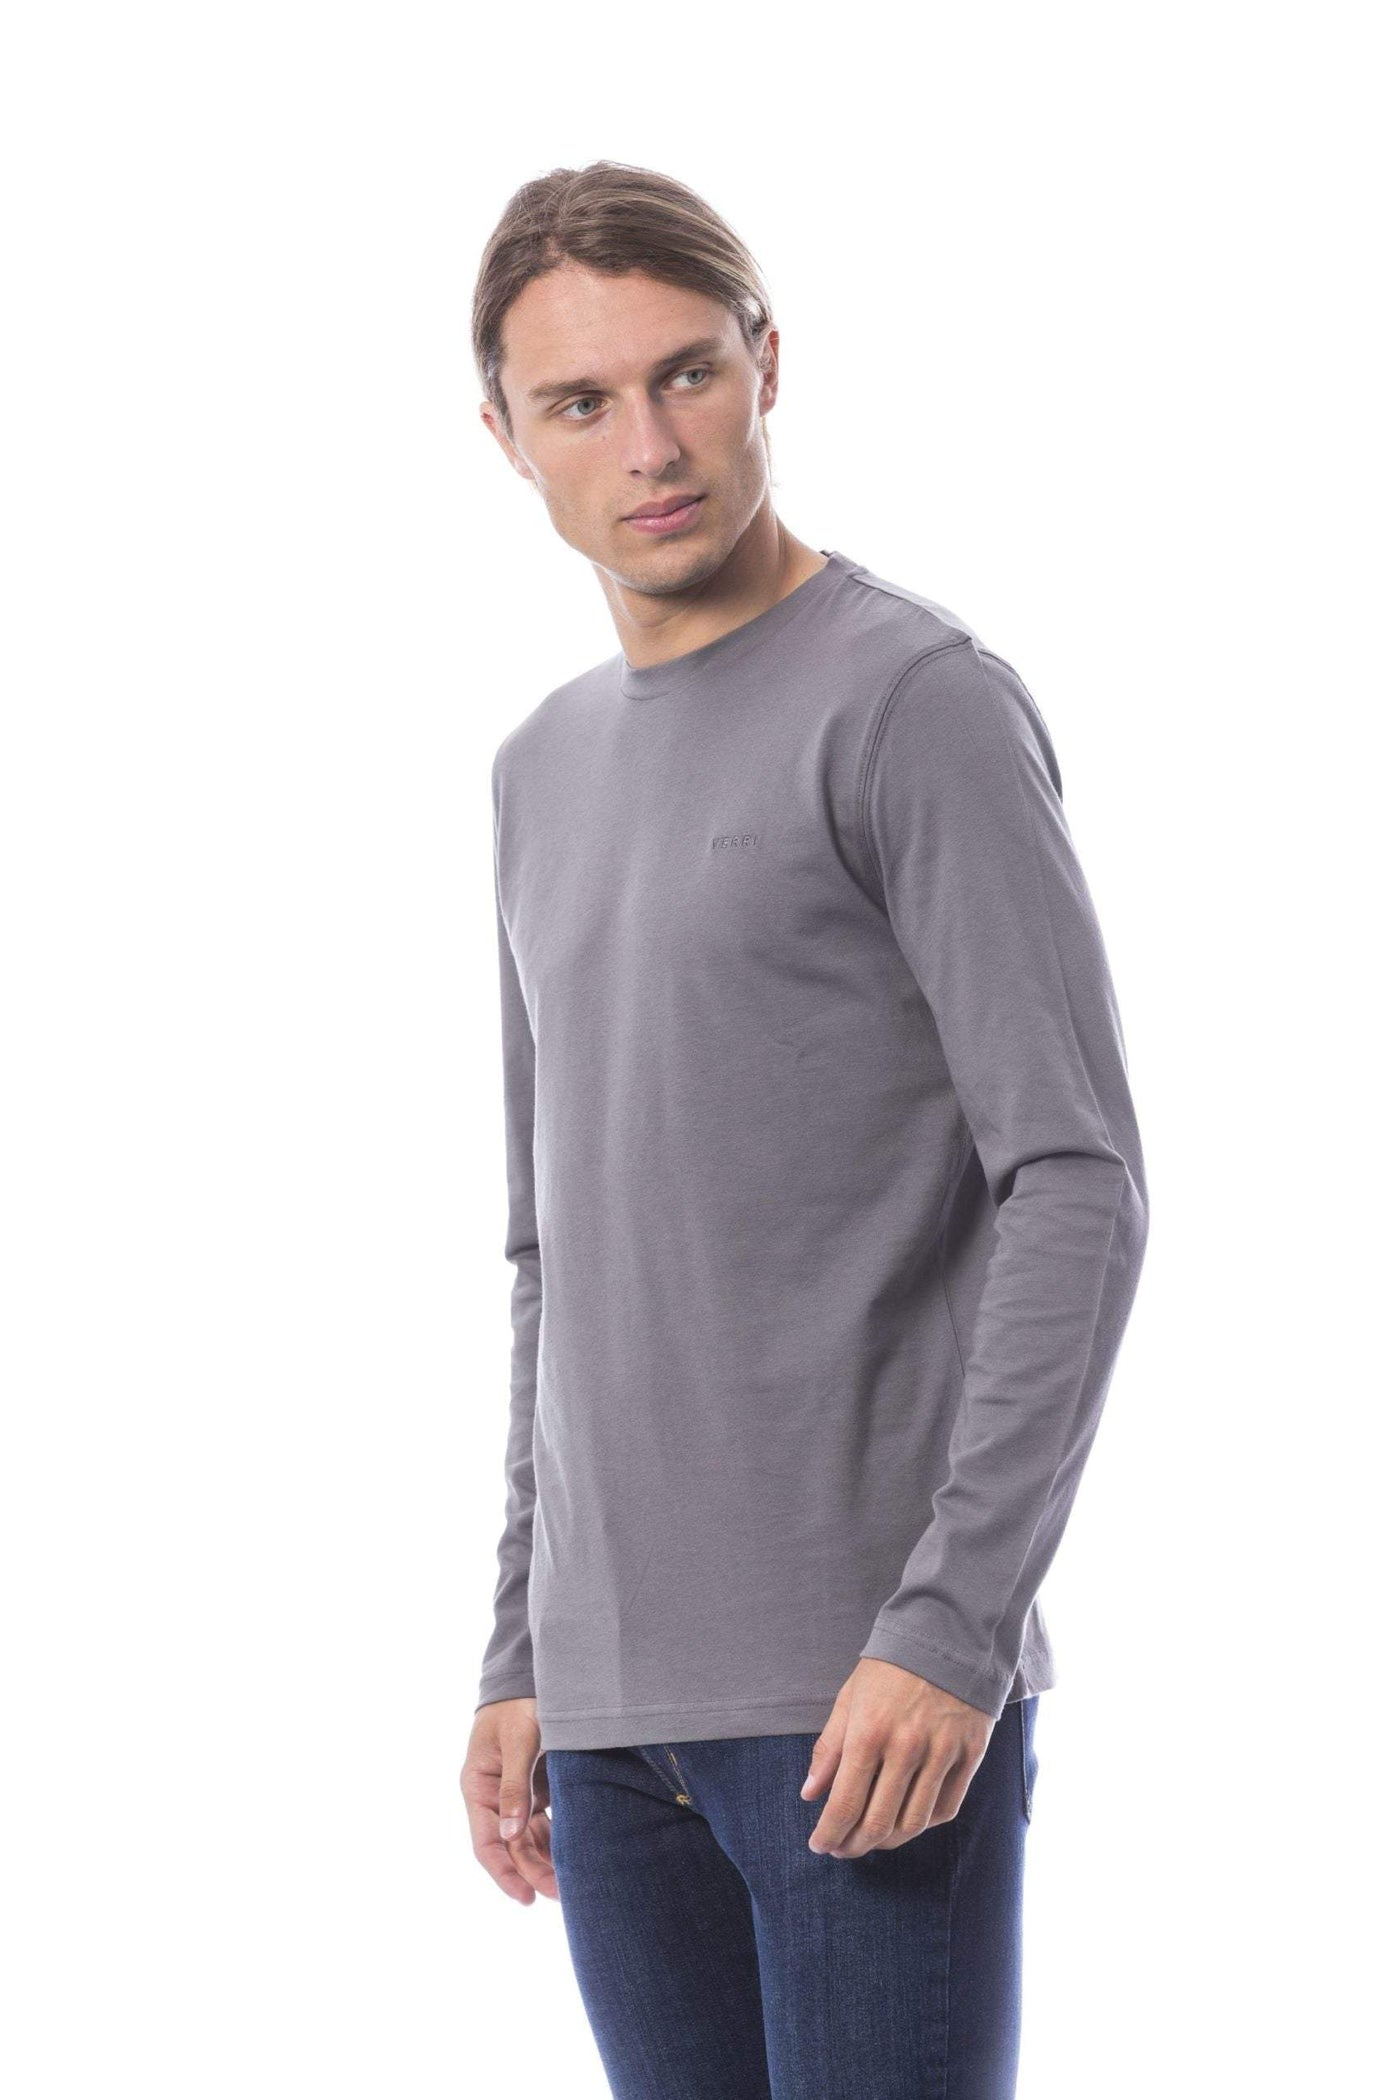 Verri Long sleeve T-shirt #men, feed-agegroup-adult, feed-color-grey, feed-gender-male, Gray, T-shirts - Men - Clothing, Verri, XL at SEYMAYKA